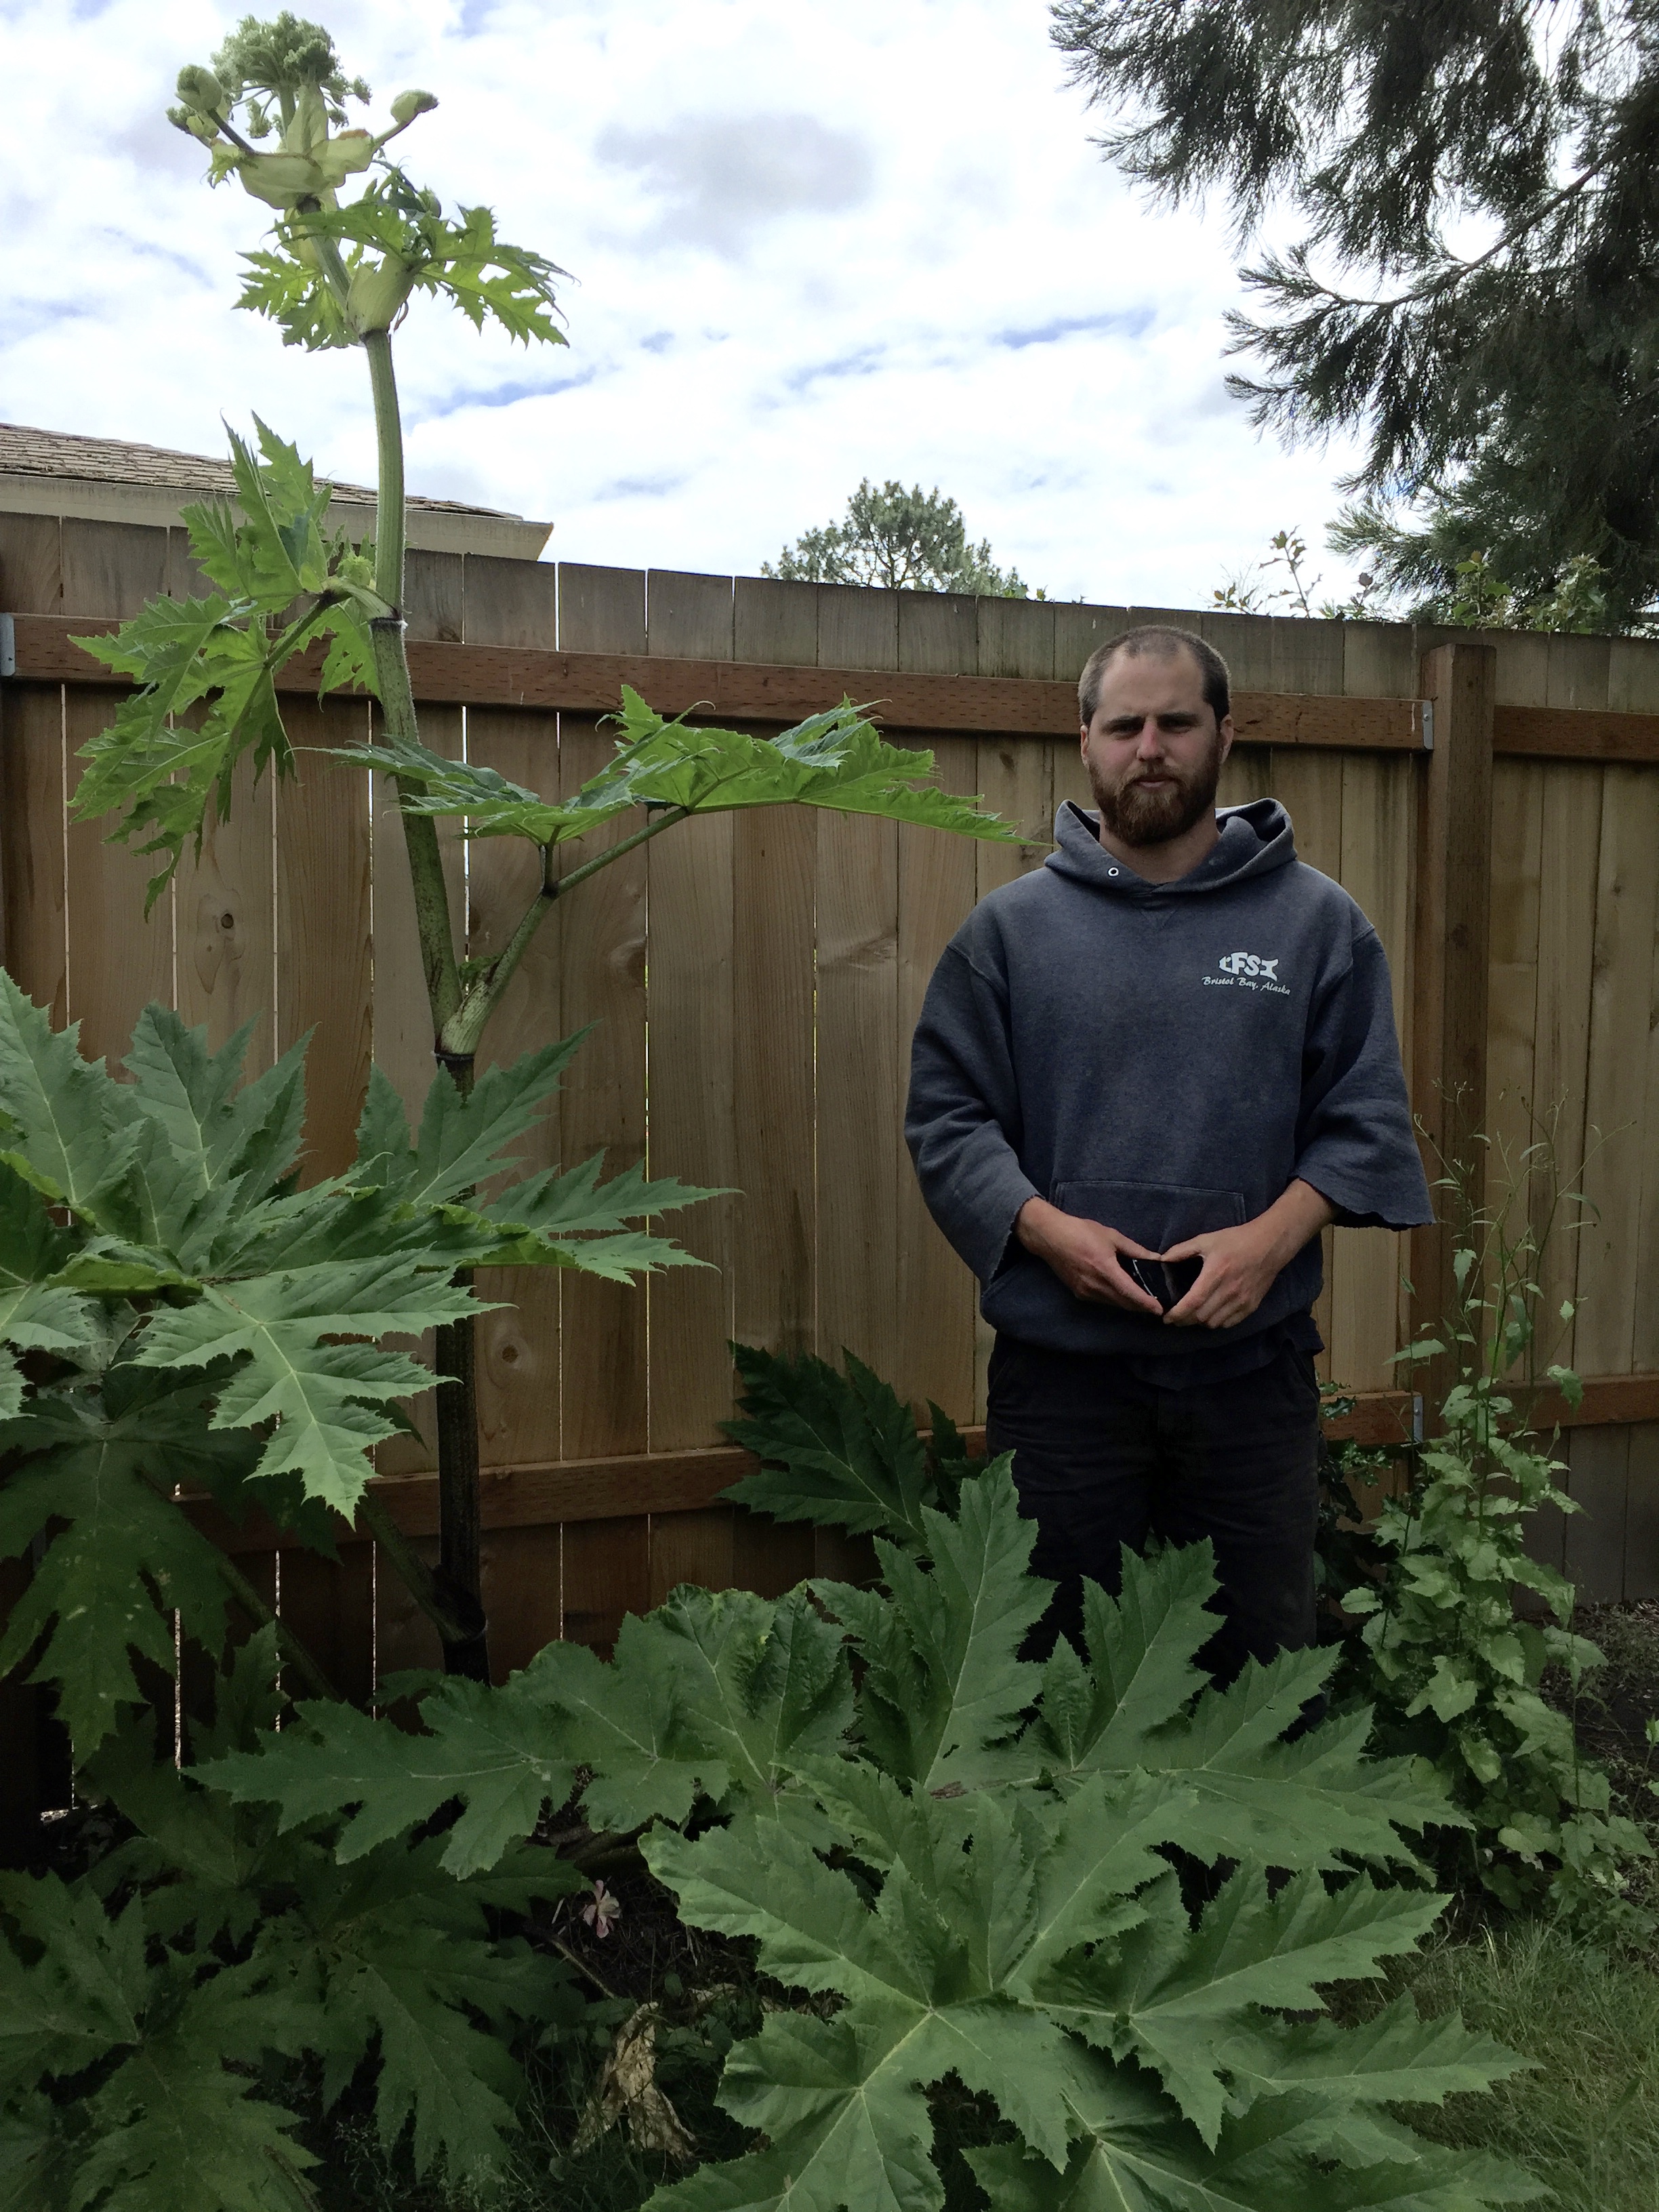 Giant hogweed plant found 6/2016